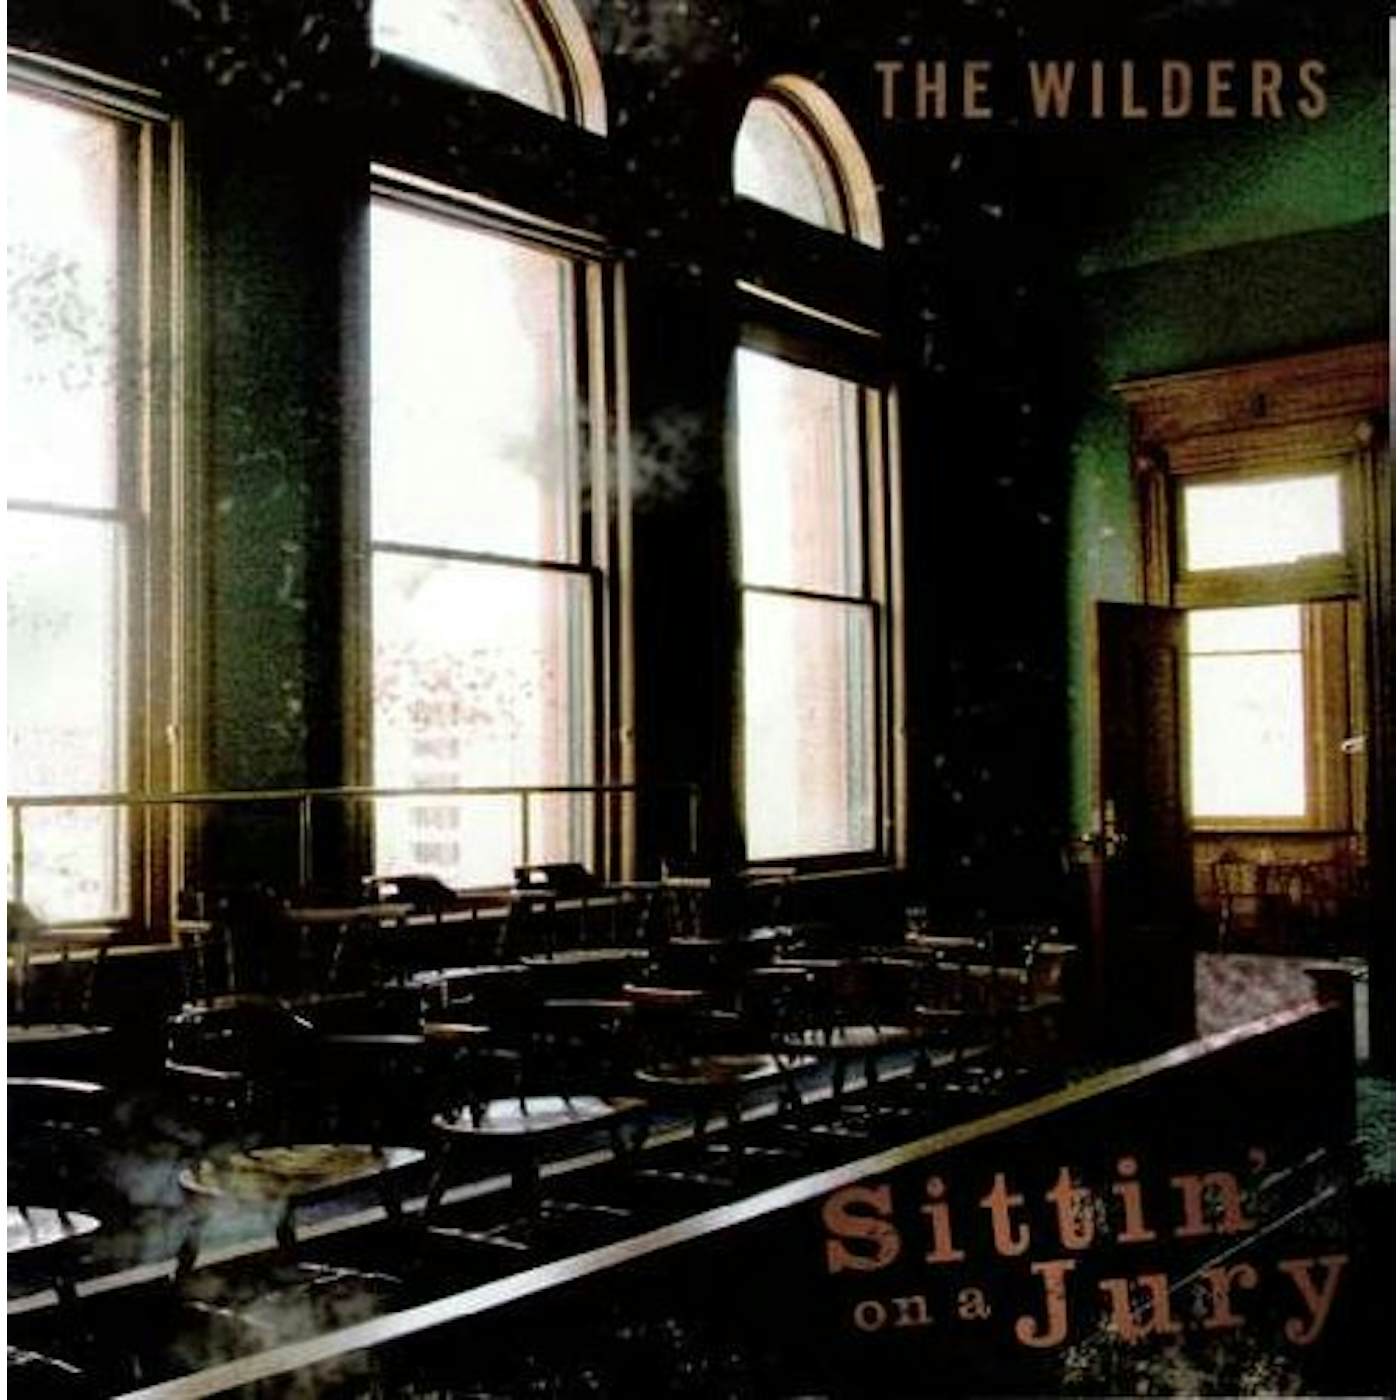 Wilders SITTIN ON A JURY Vinyl Record